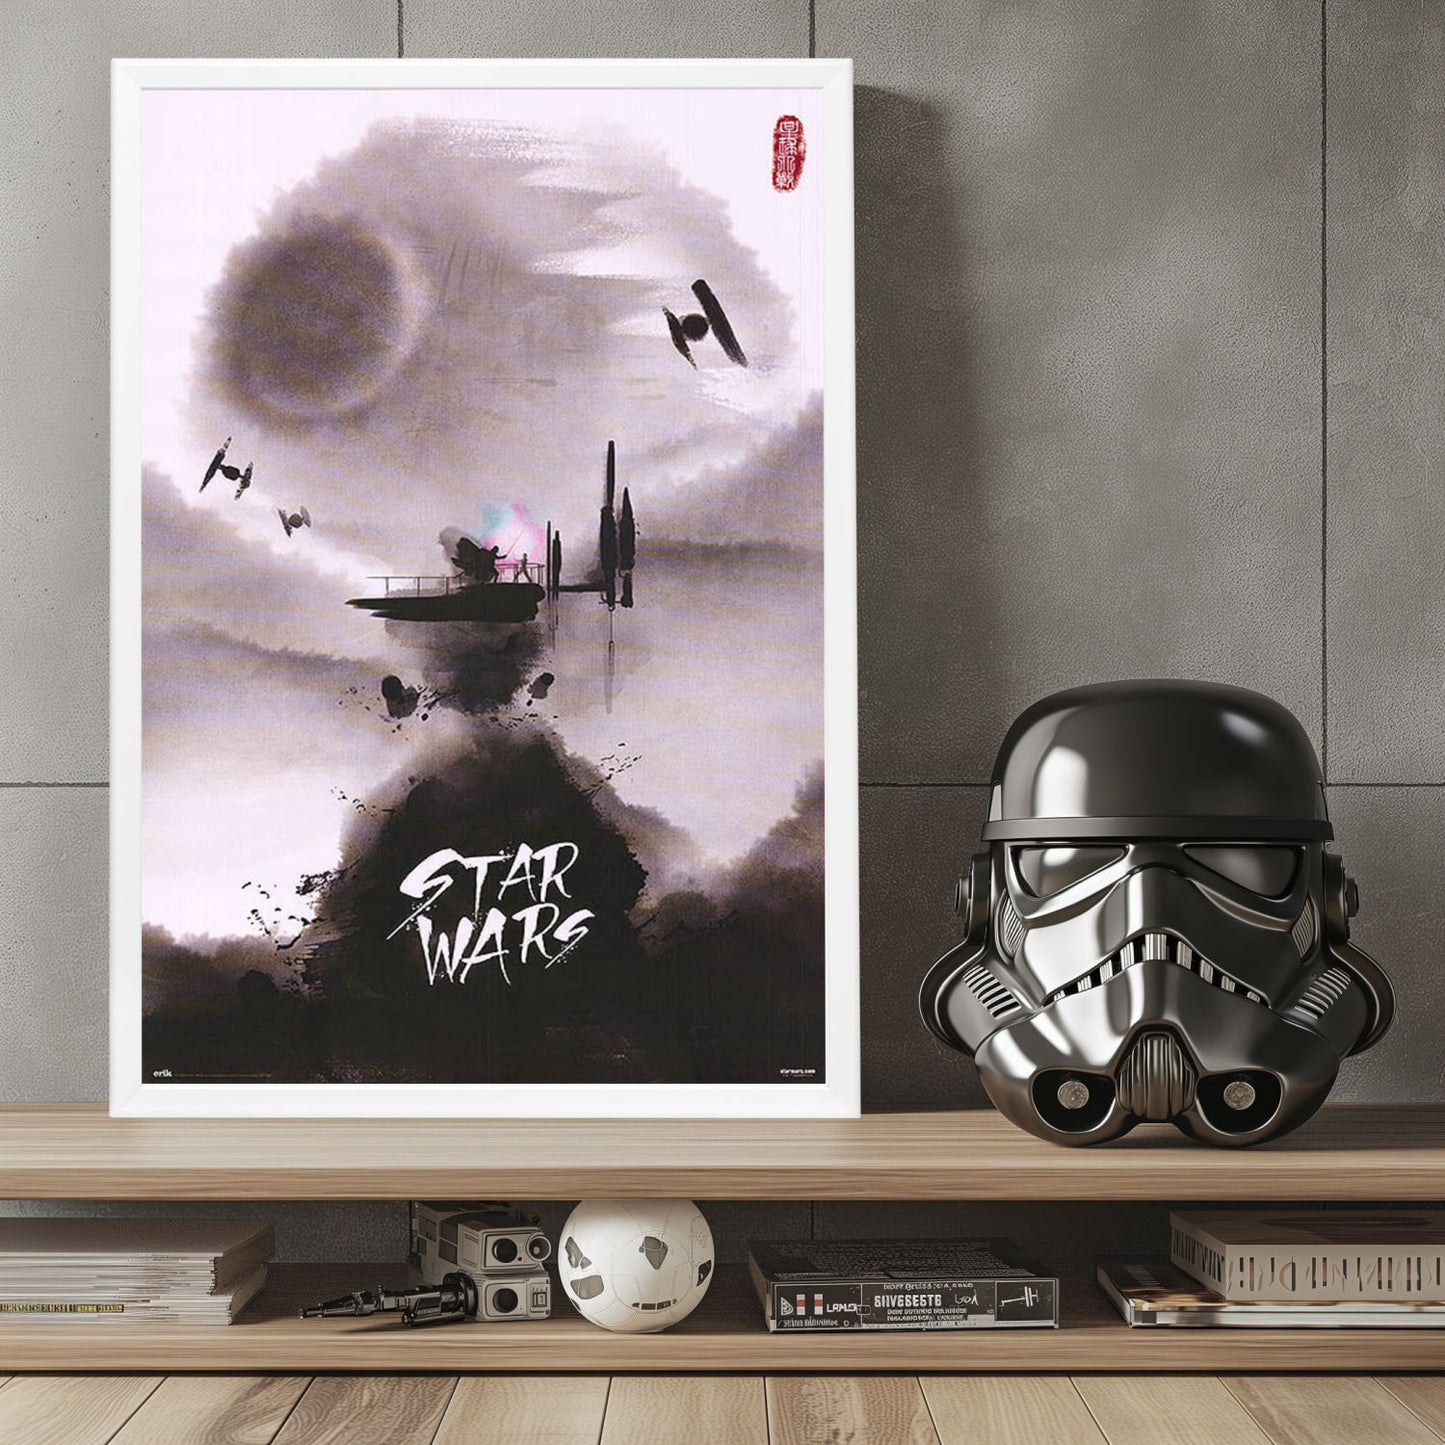 "Star Wars" (1977) Framed Movie Poster